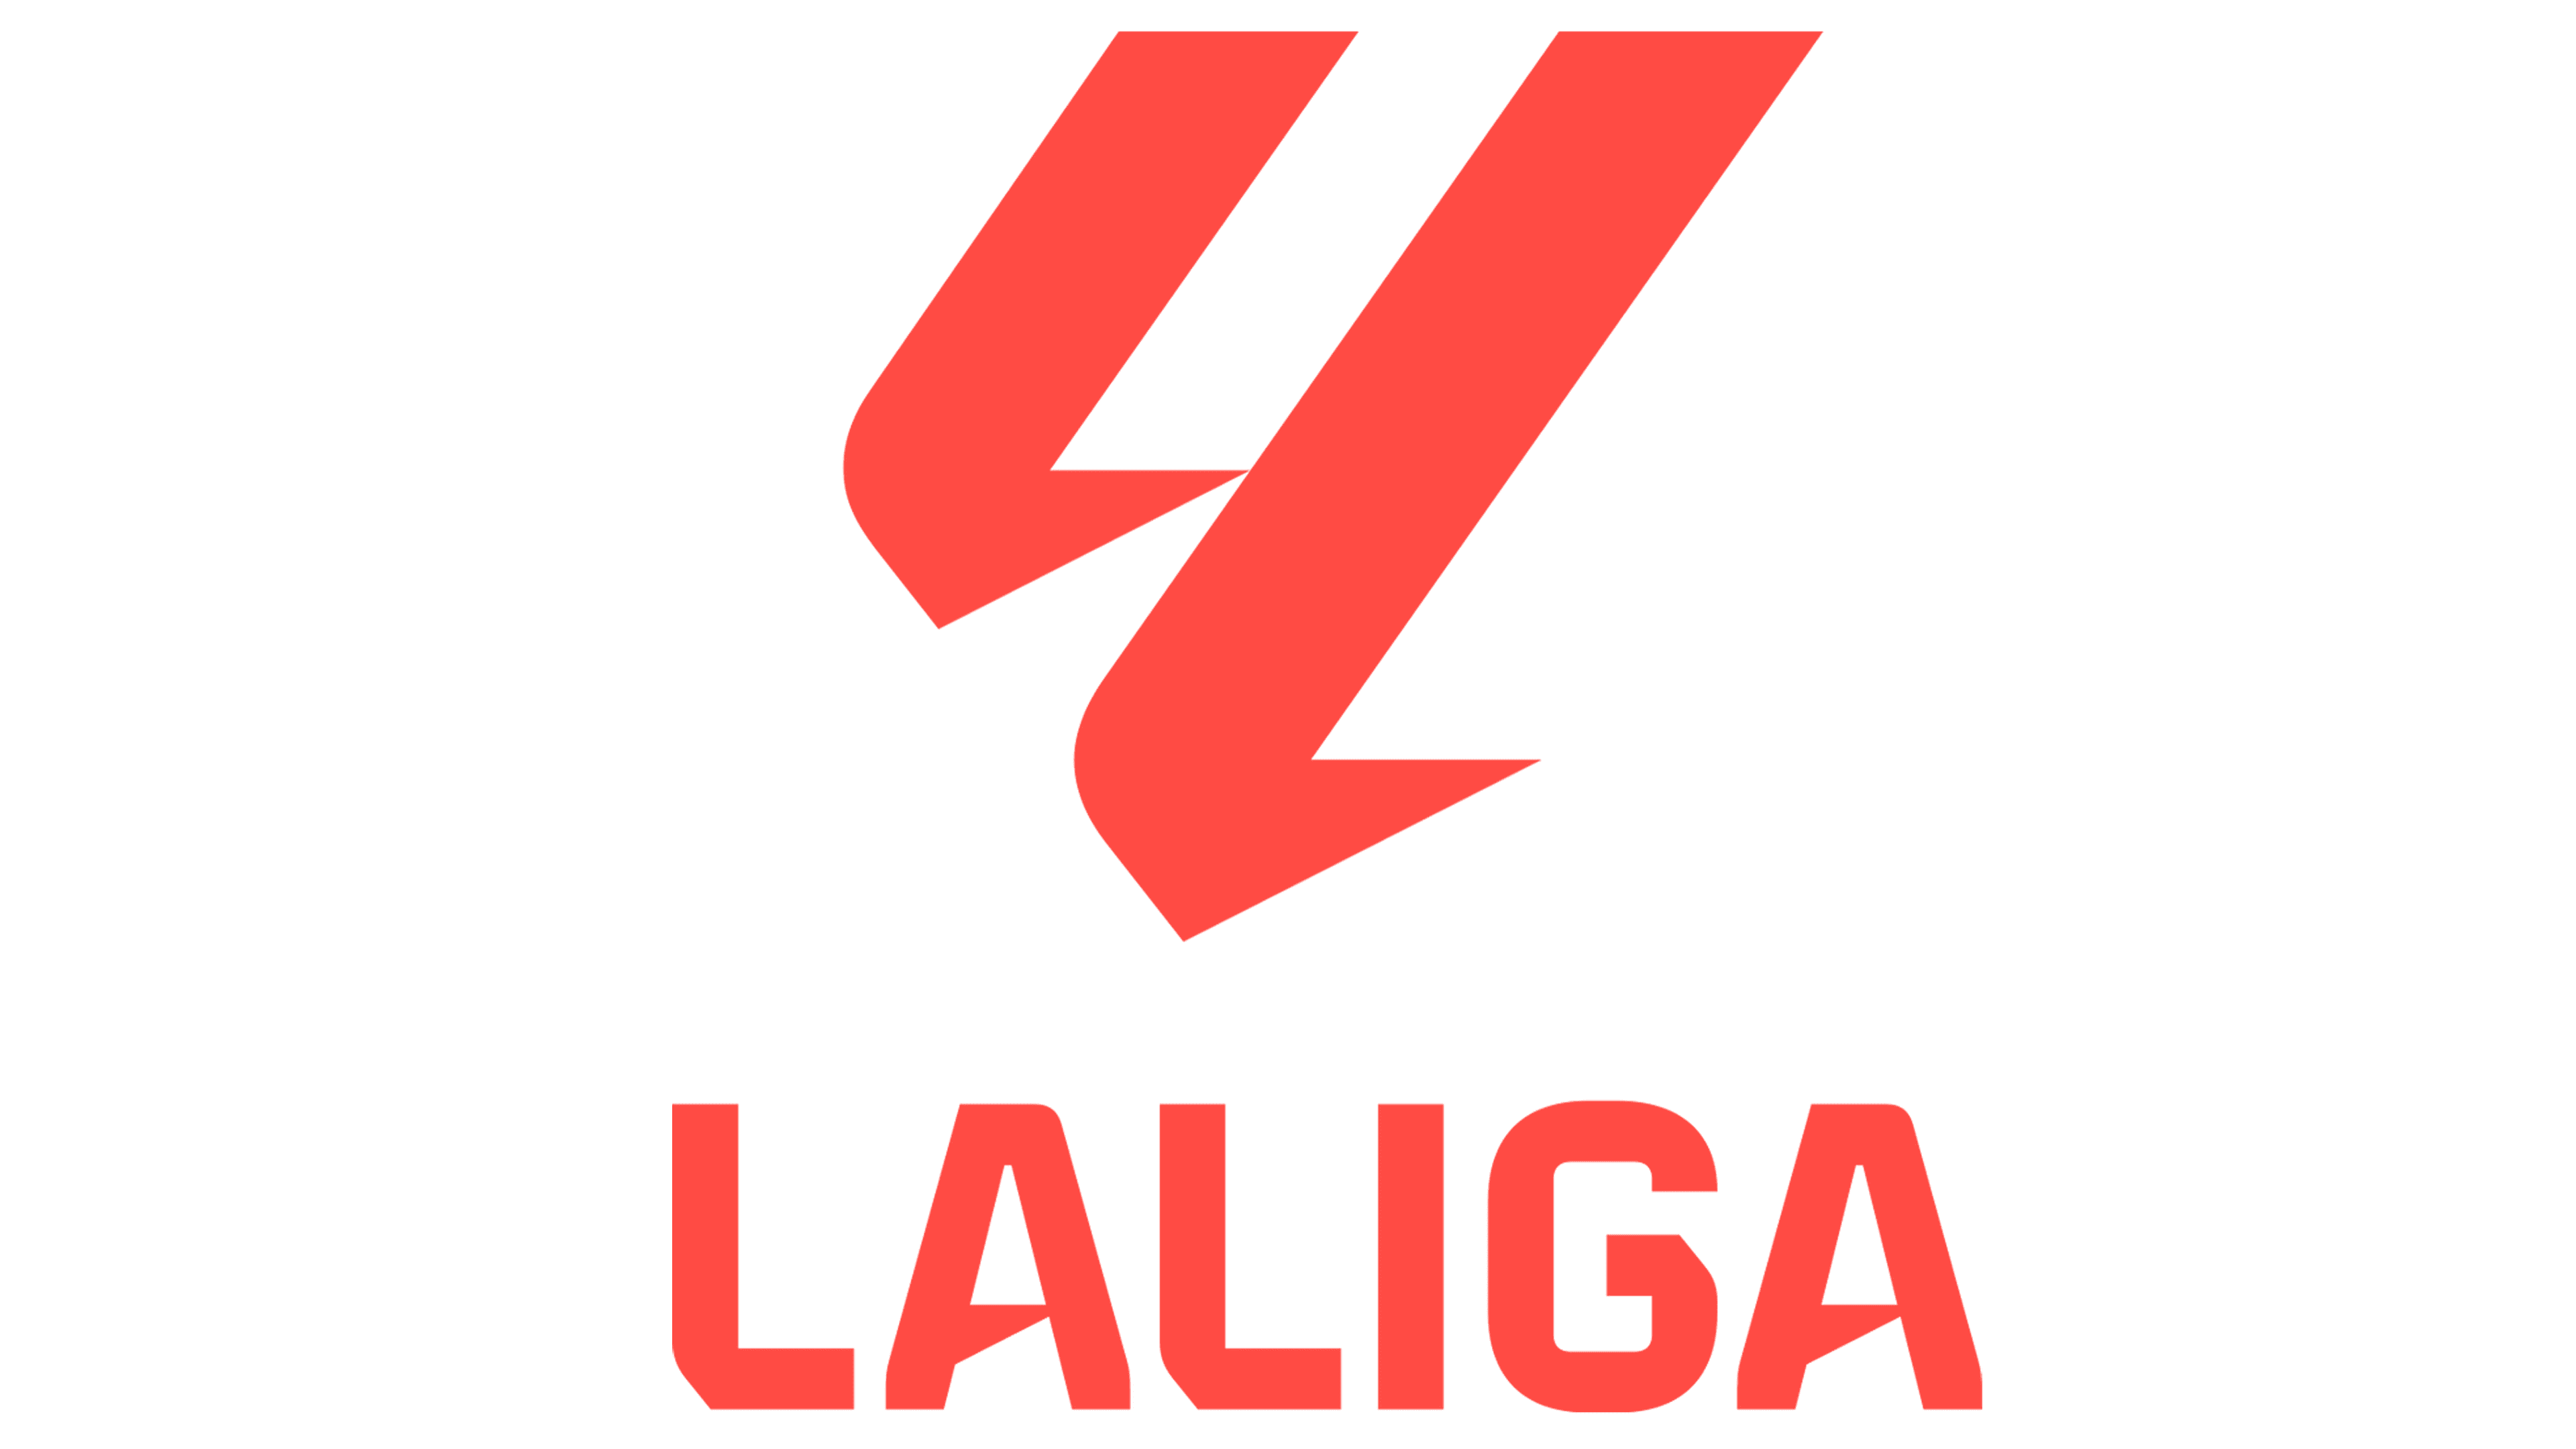 https://1000logos.net/wp-content/uploads/2019/01/Spanish-La-Liga-Logo.png